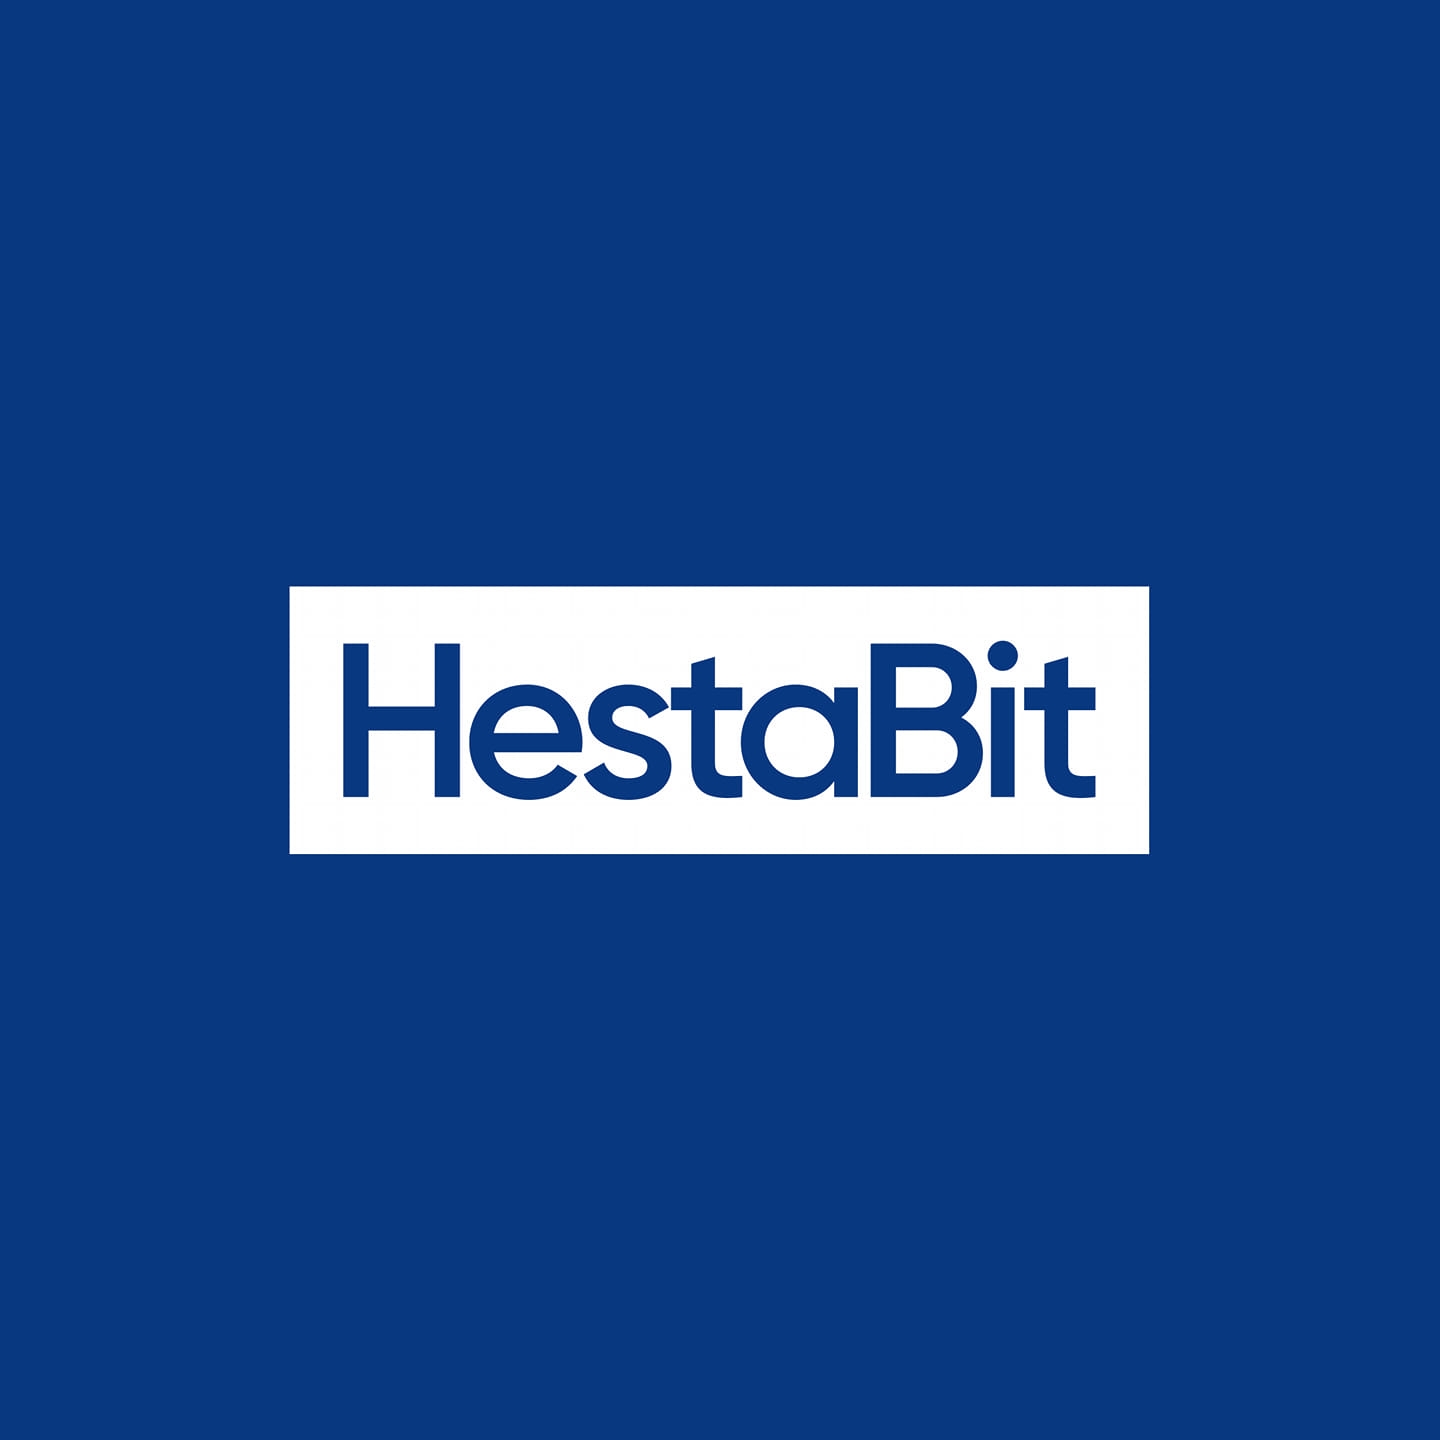 HestaBit Technologies